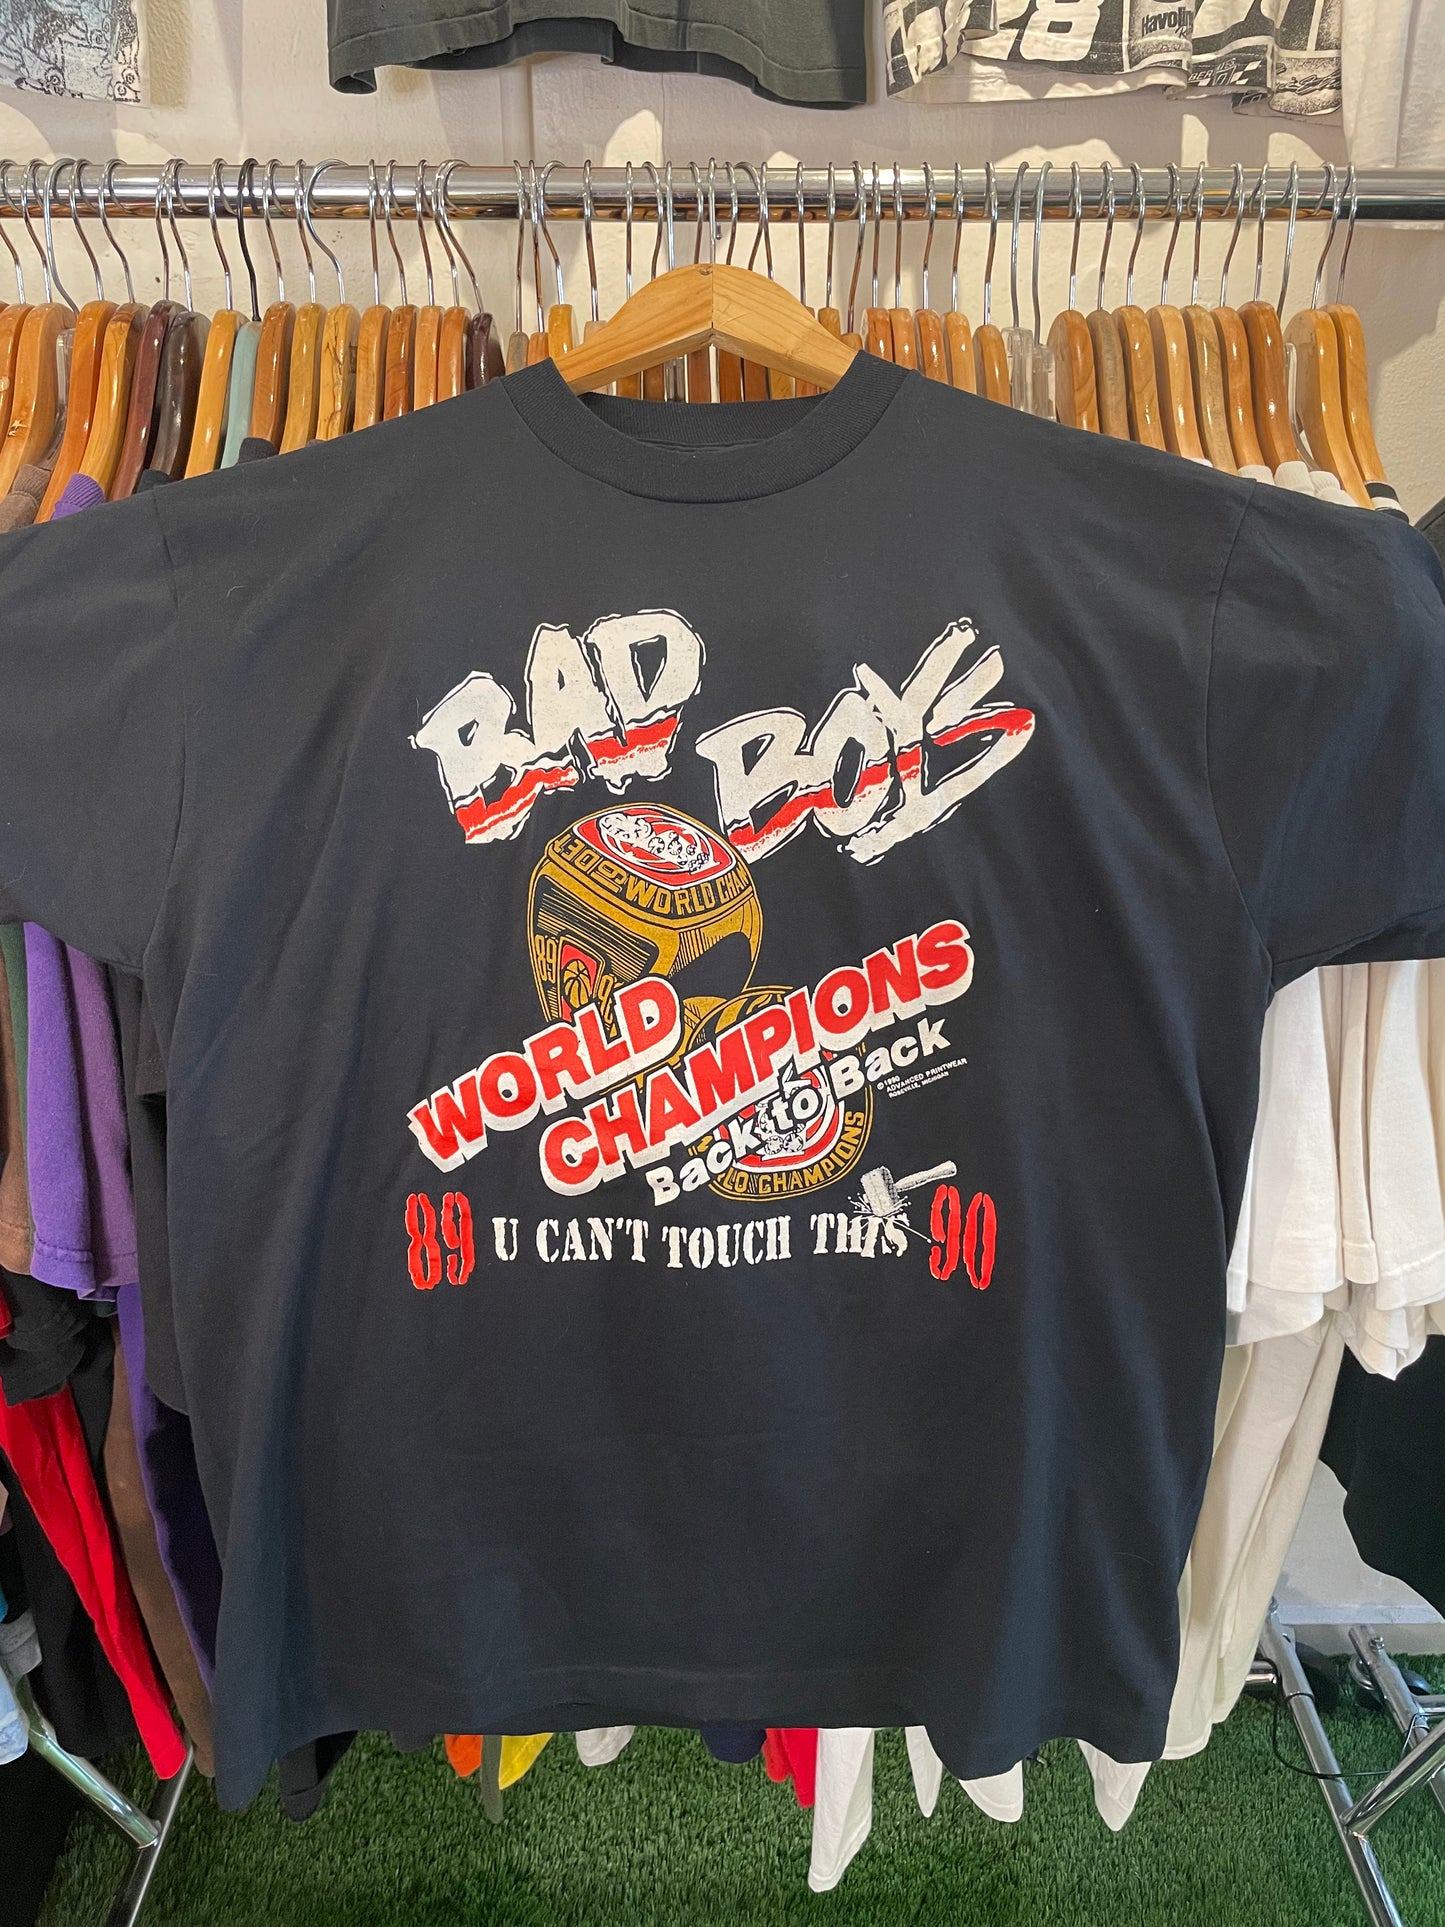 Bad boys 89’ (L)